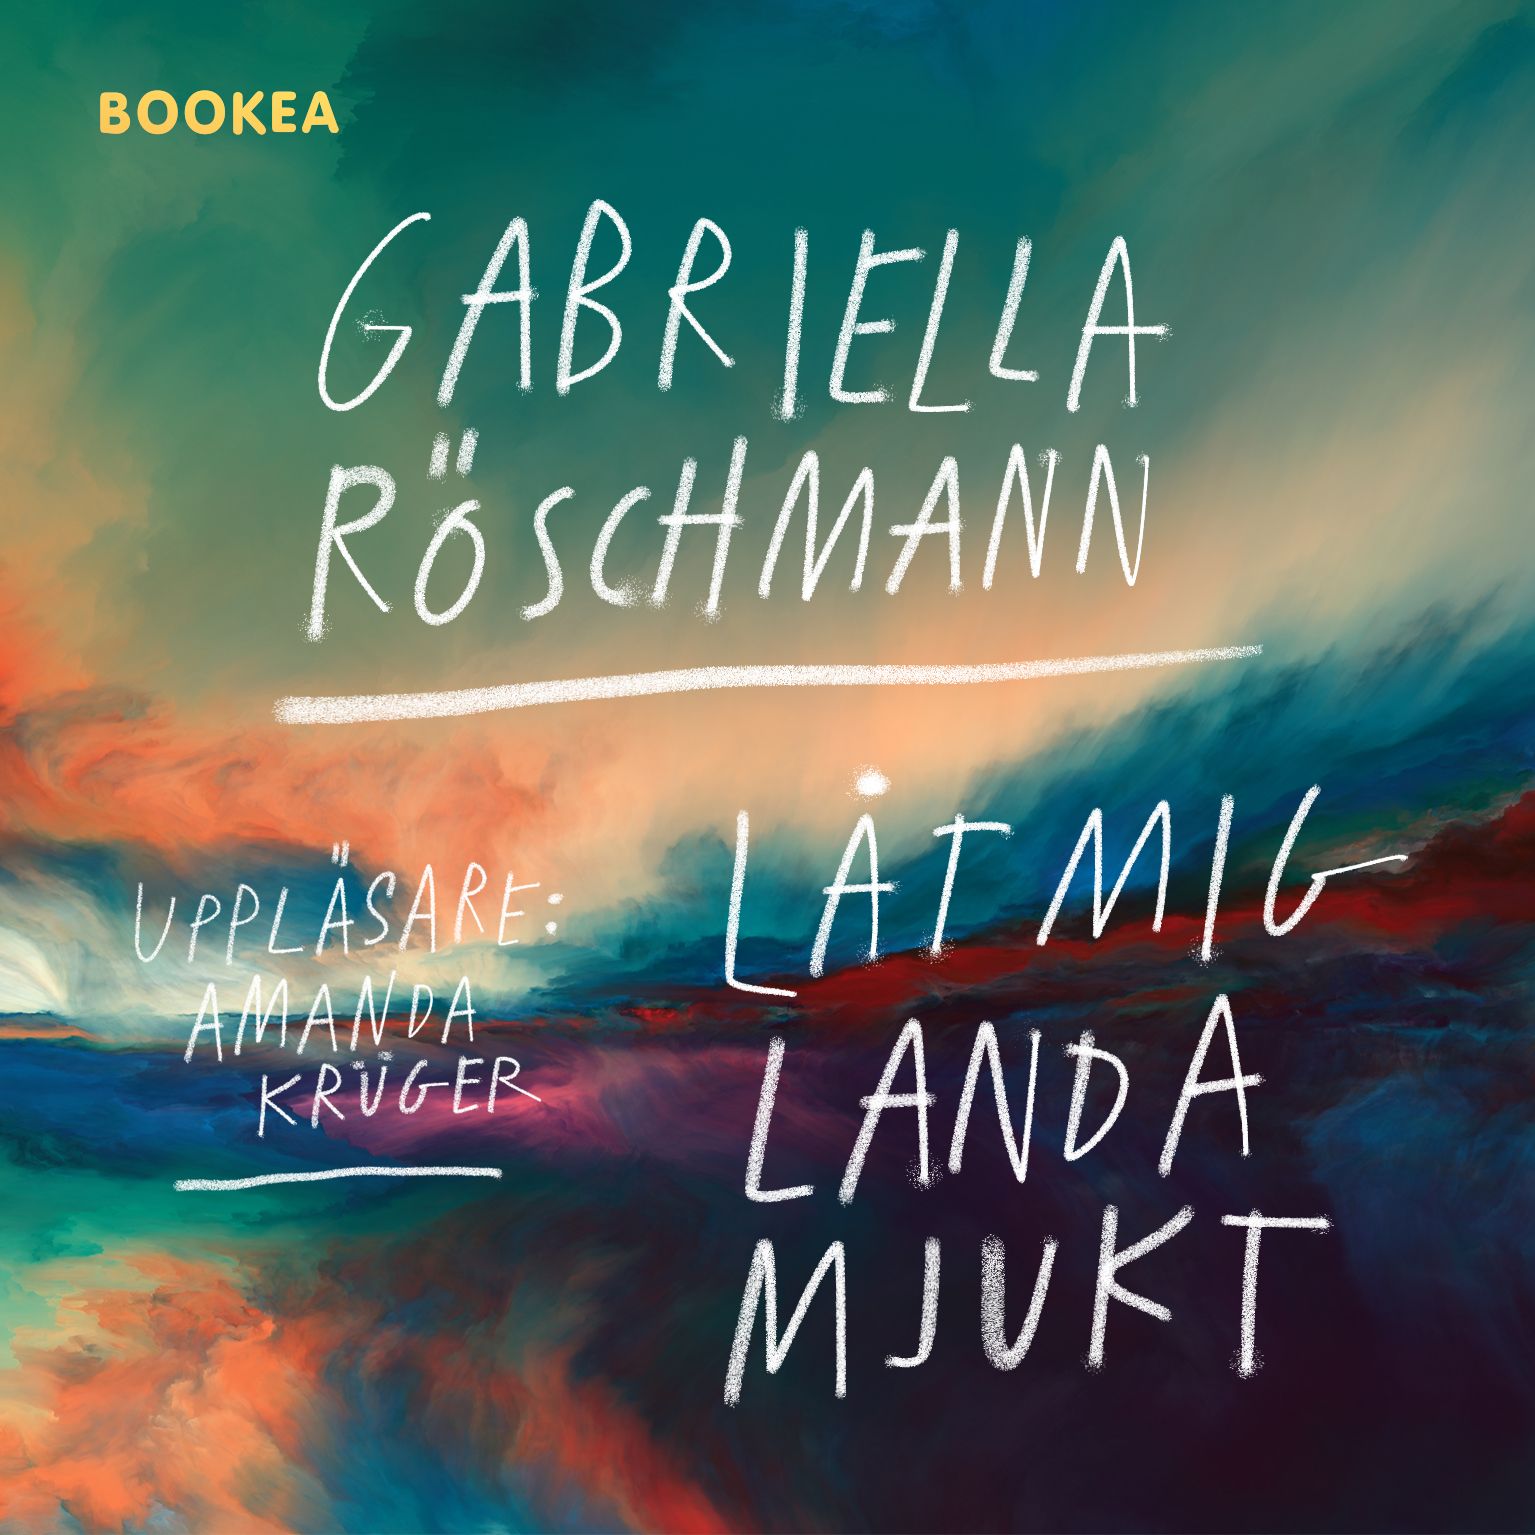 Låt mig landa mjukt, lydbog af Gabriella Röschmann